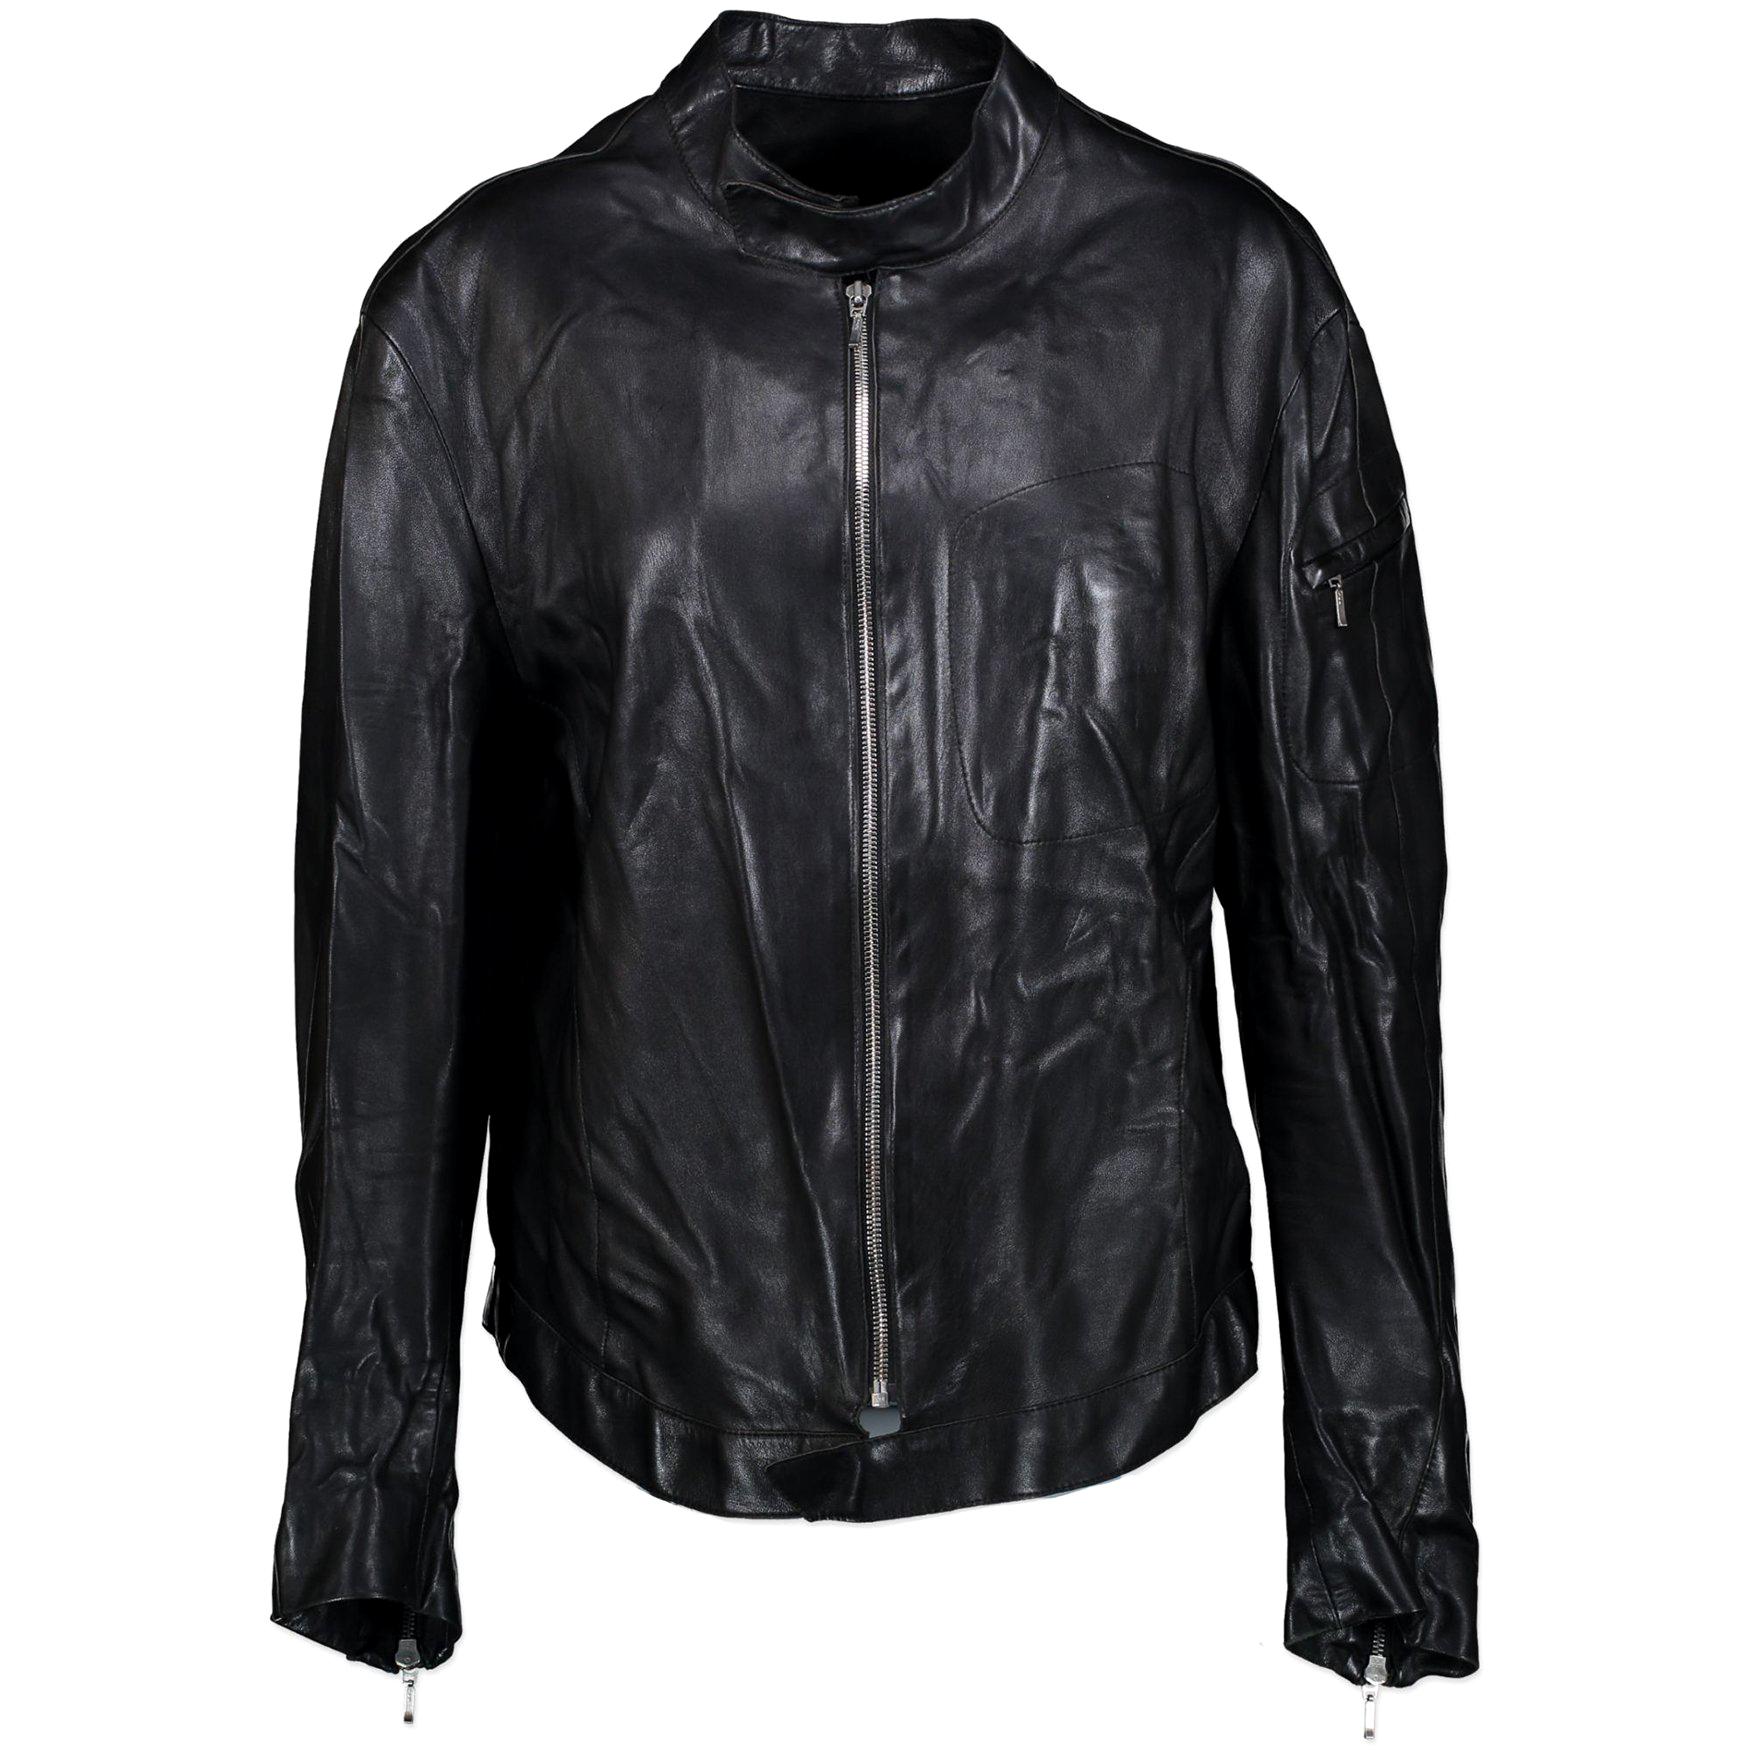 Thierry Mugler Vintage Leather Jacket - size M